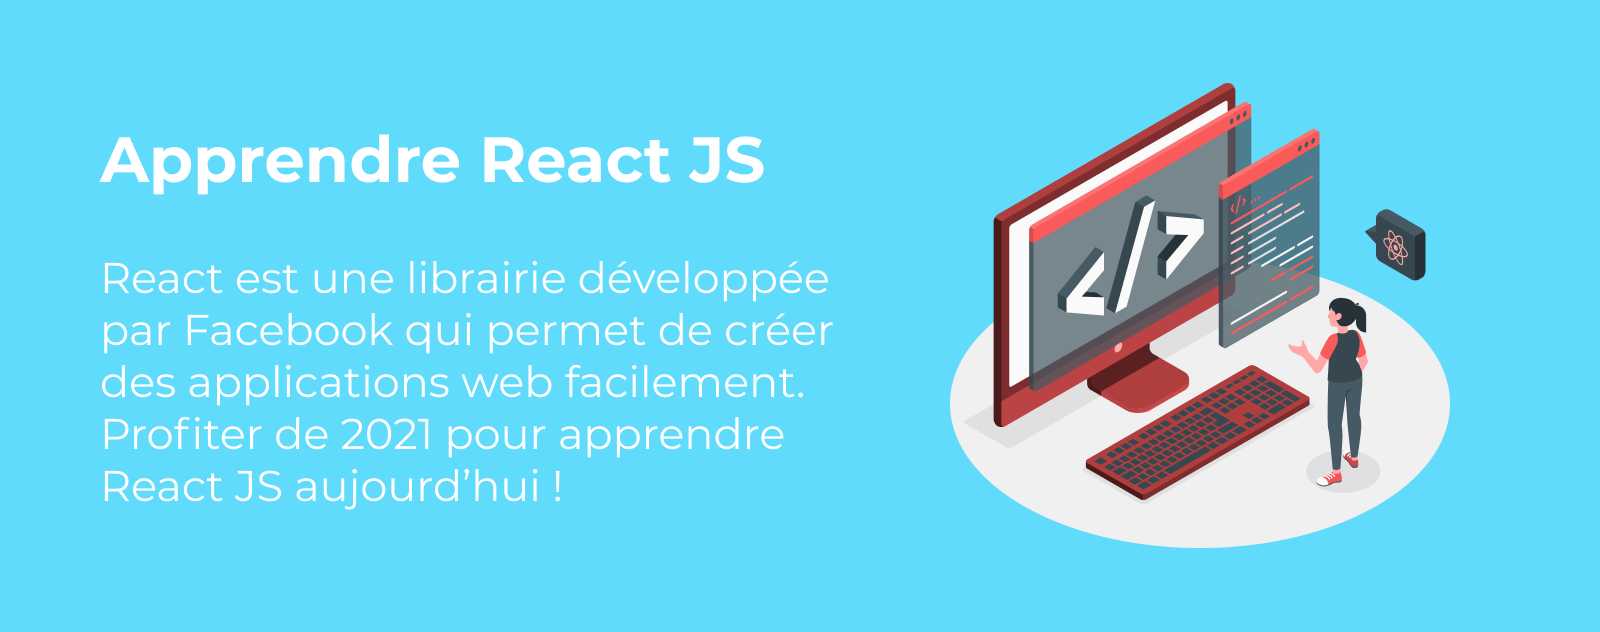 Apprendre React JS